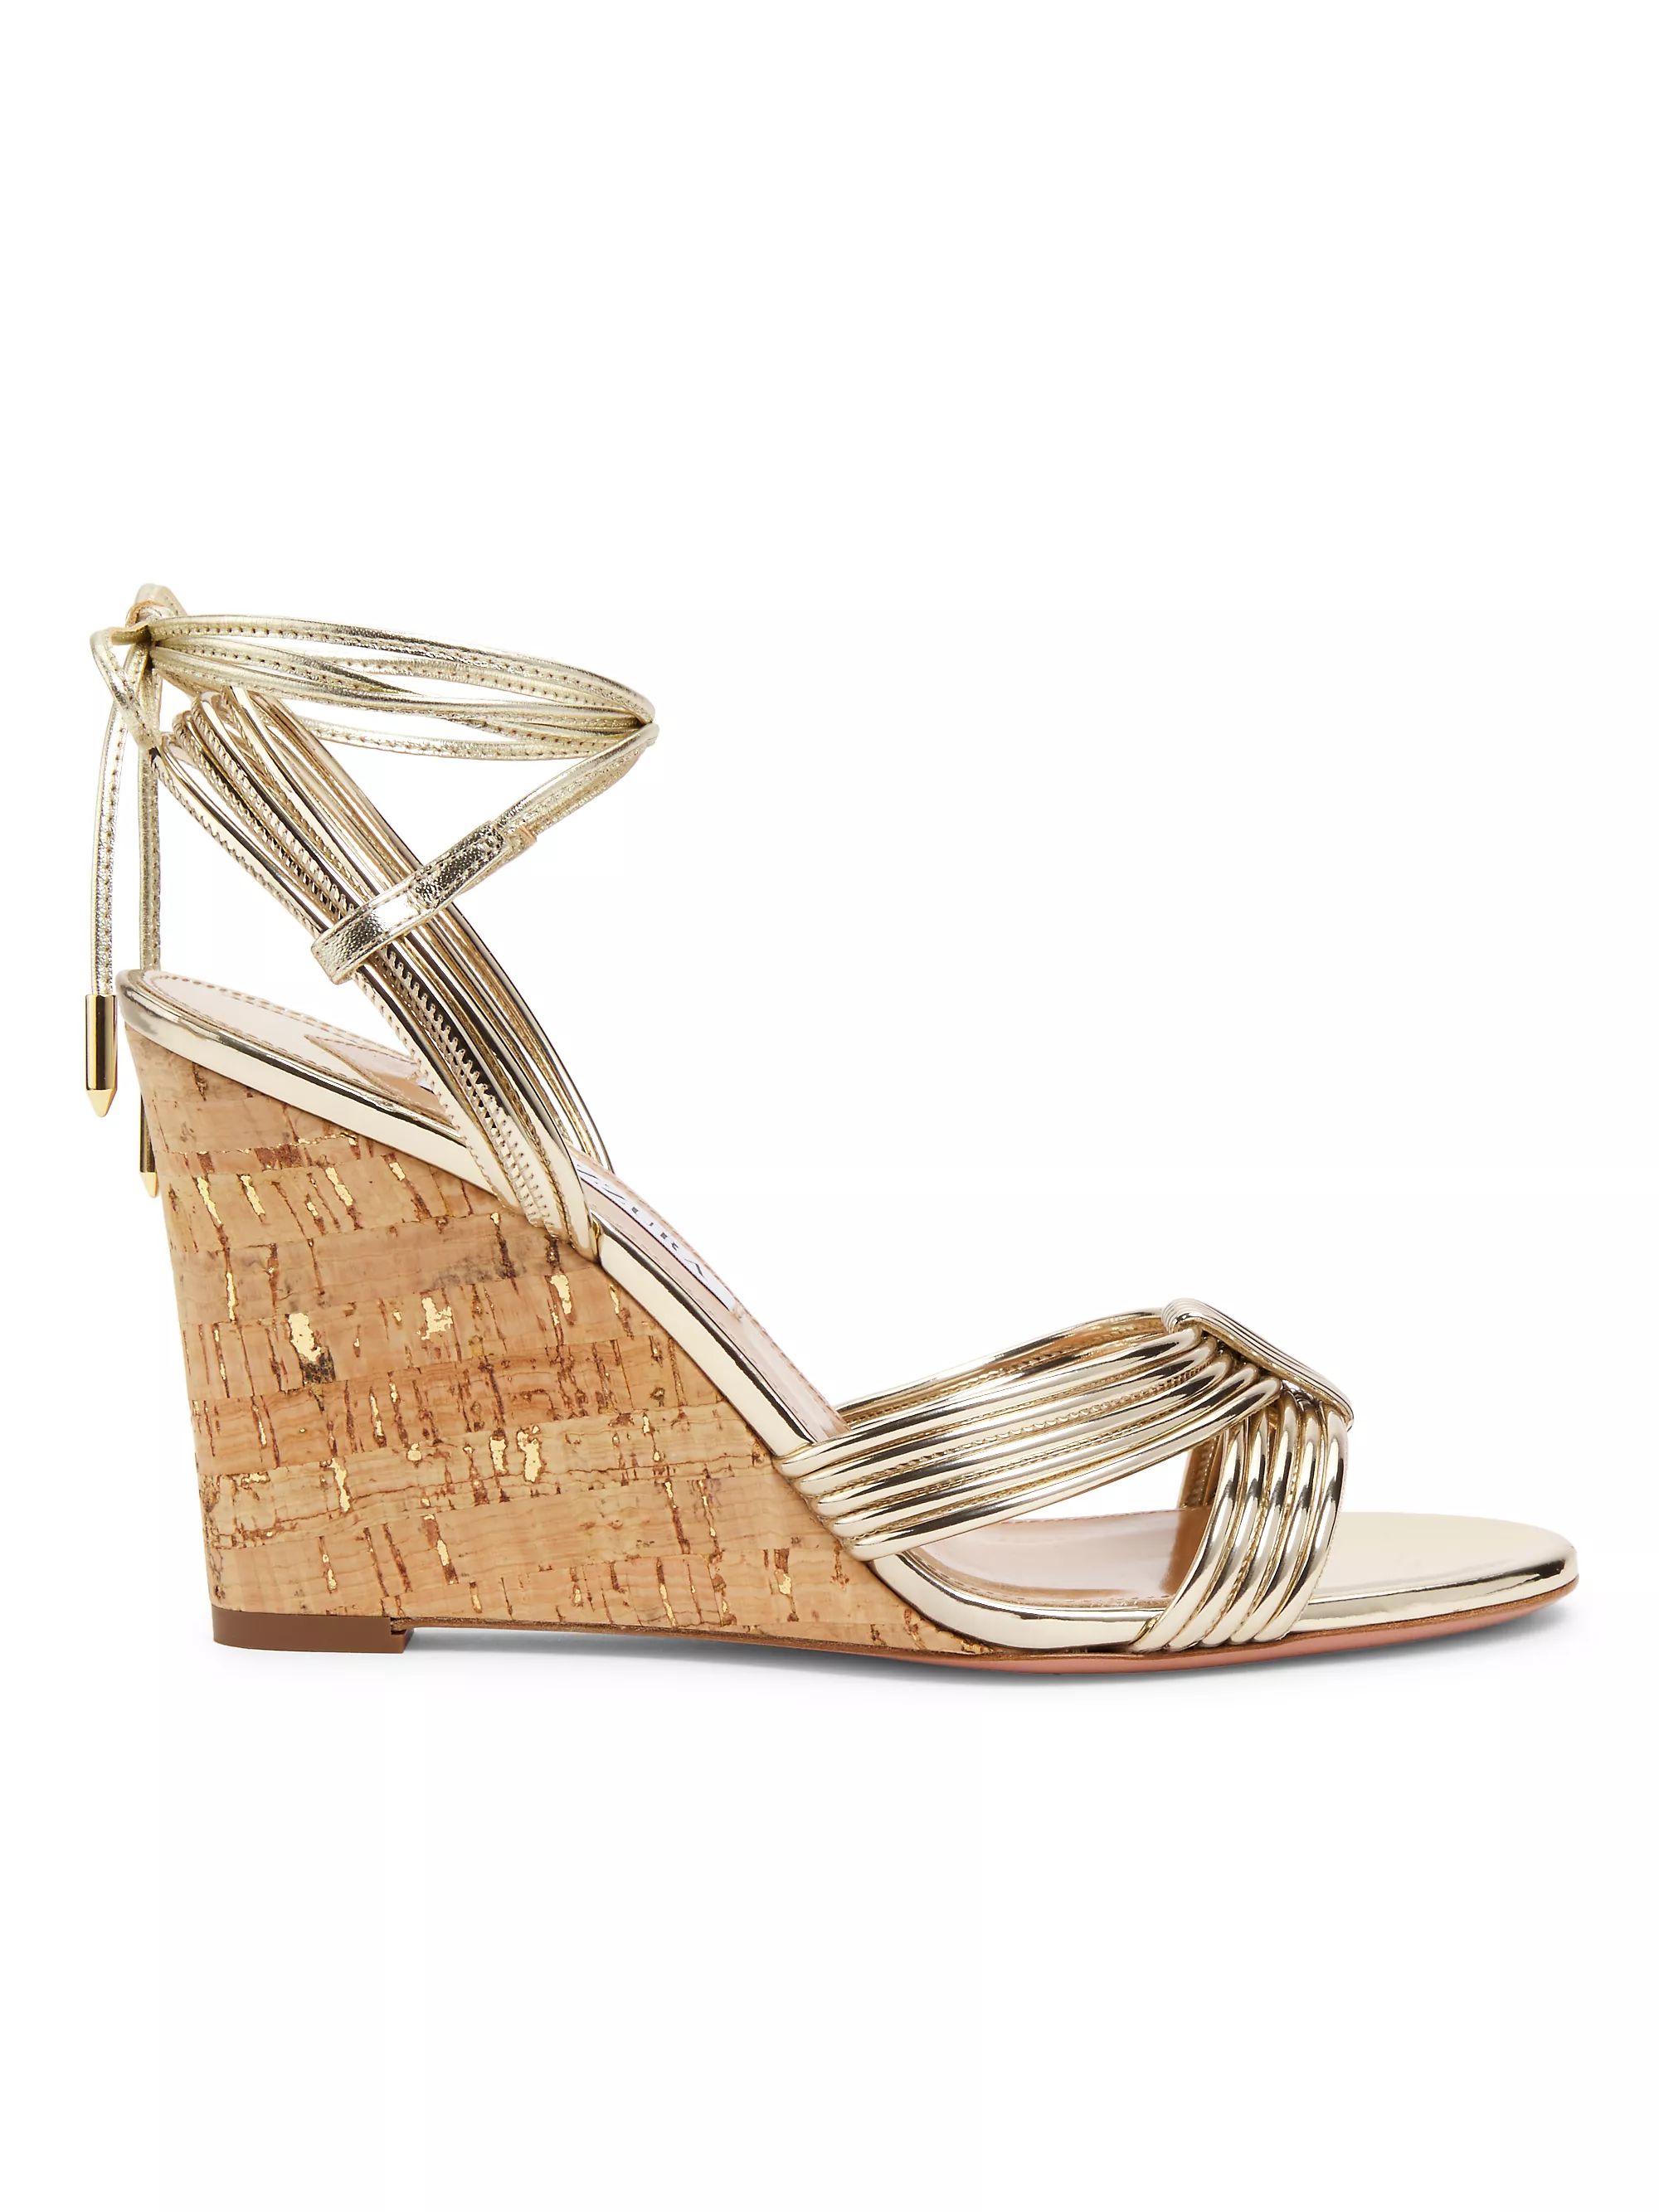 Shop Aquazzura 85MM Strappy Metallic Wedge Sandals | Saks Fifth Avenue | Saks Fifth Avenue